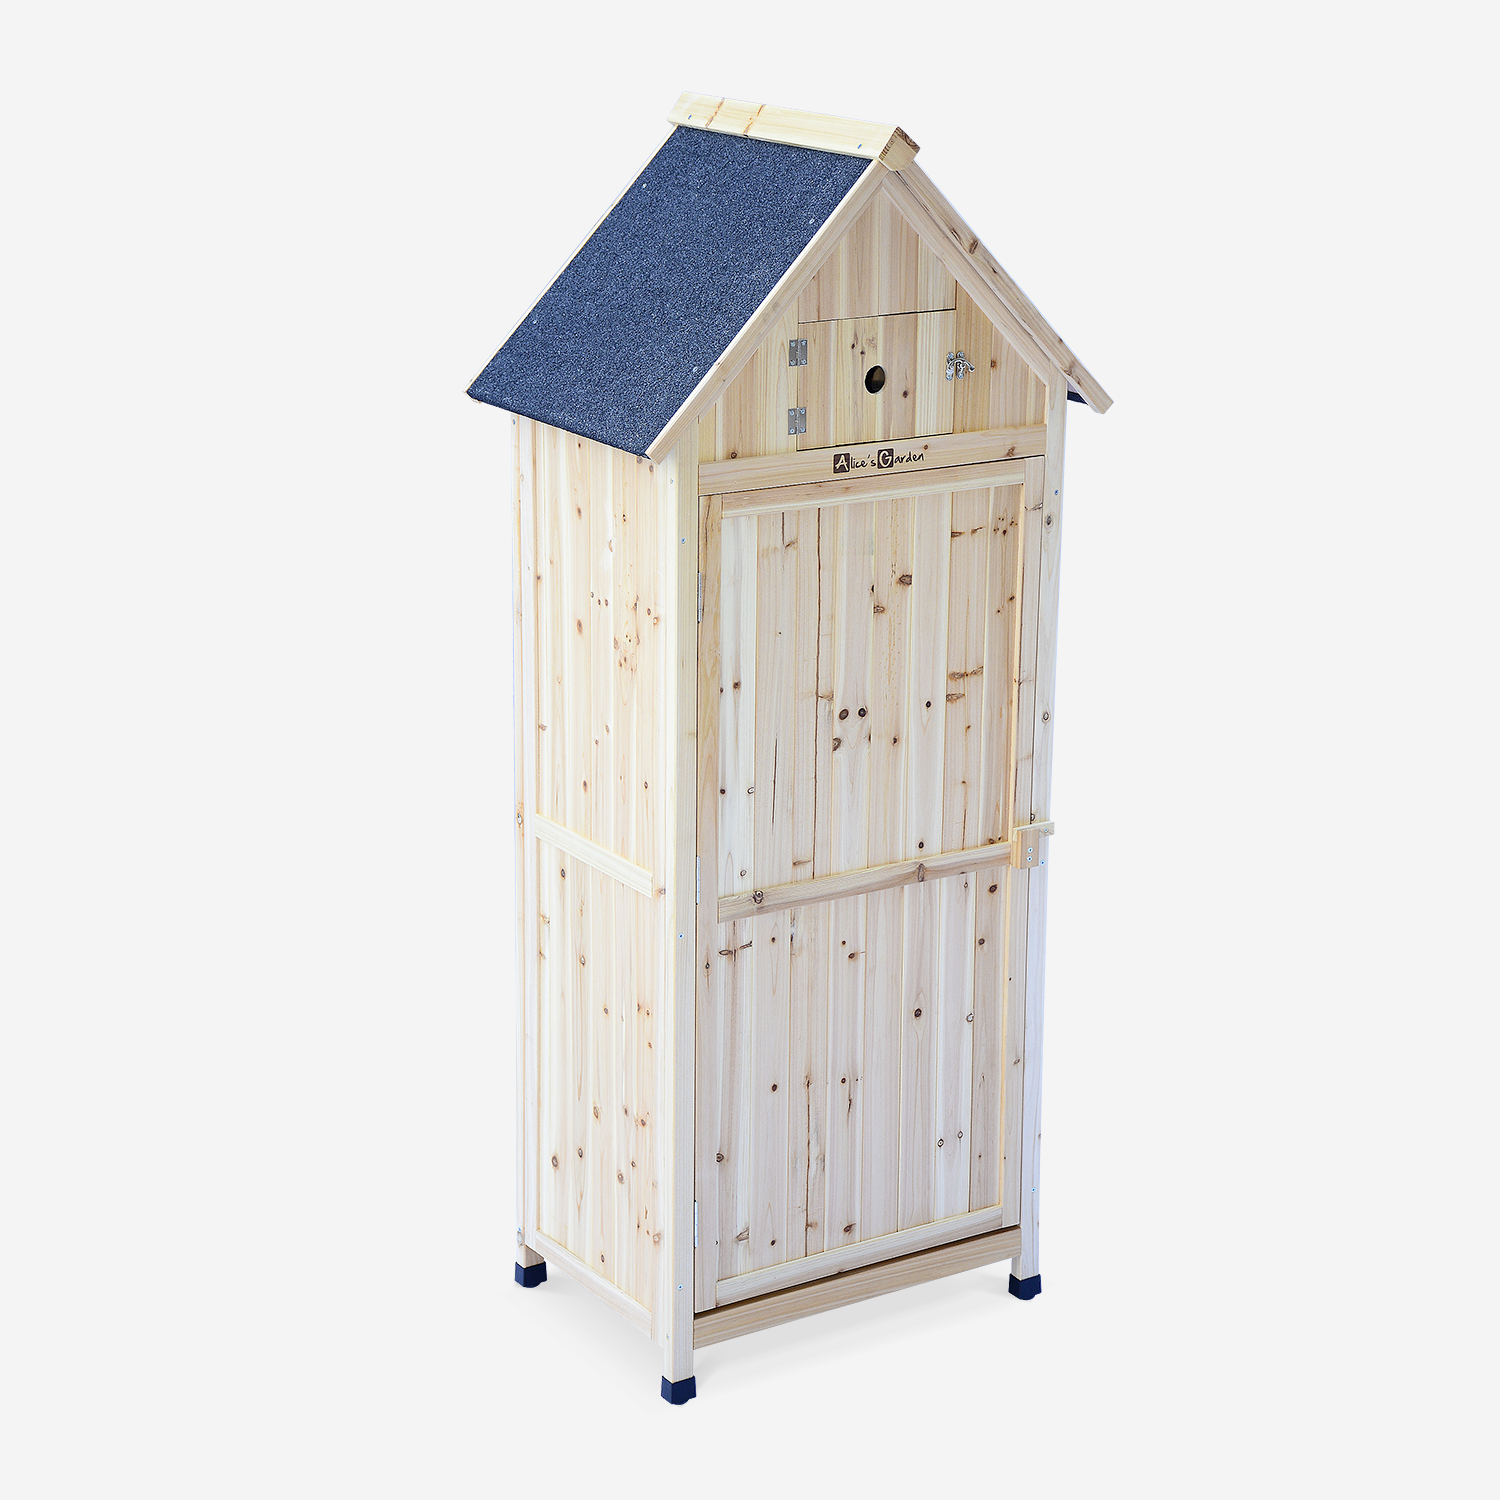 Wooden garden cabinet - 77x54.5x179 cm - Garden shed, storage cupboard, tool storage - Mimosa - Natural,sweeek,Photo1